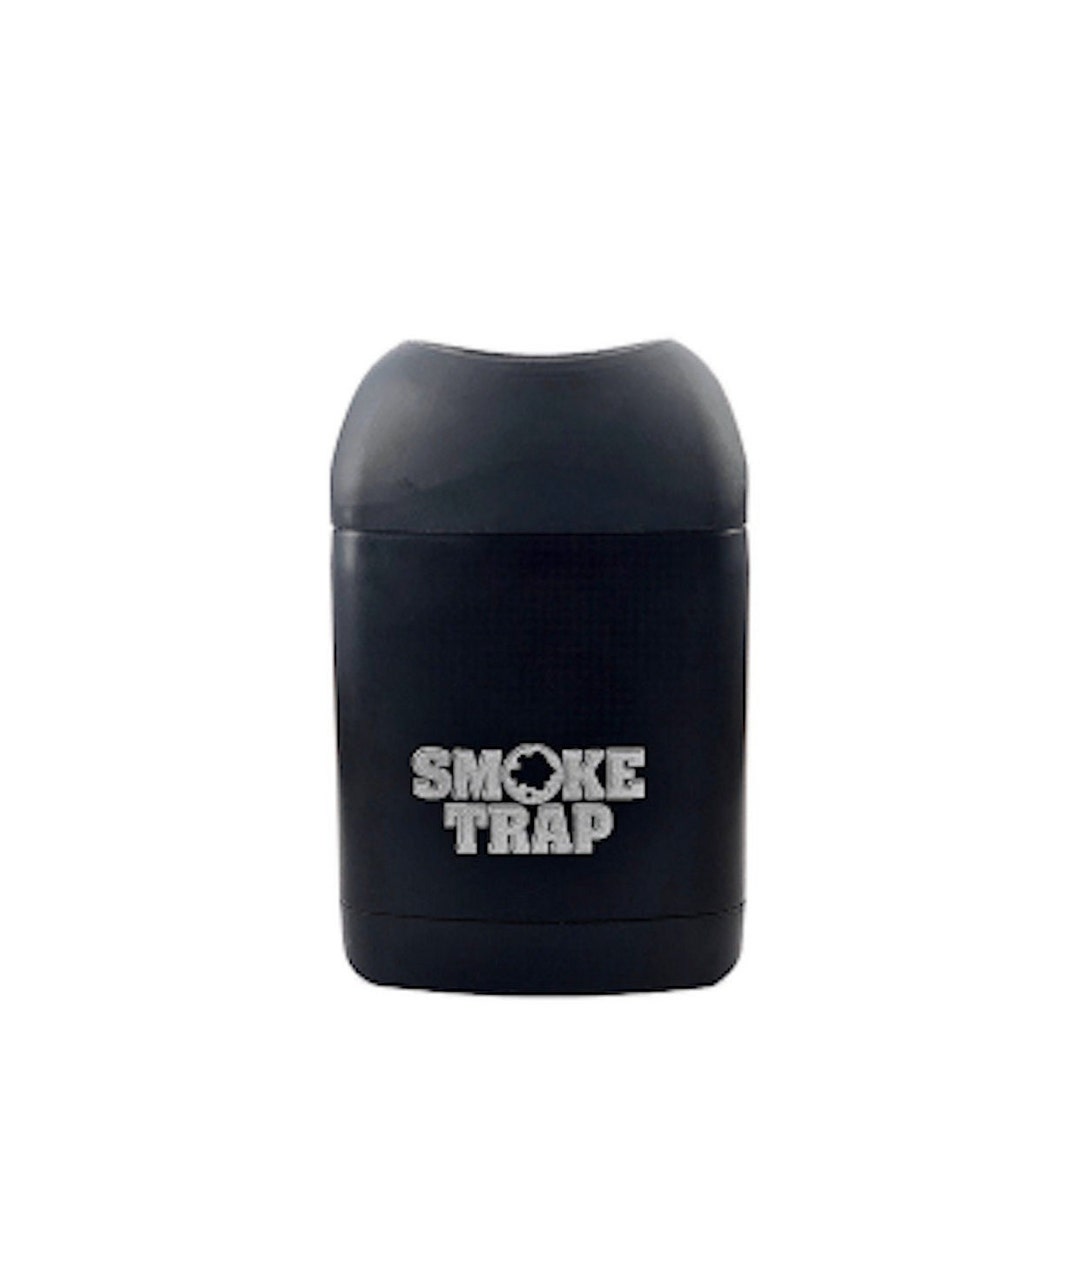 Smoke Trap, Black, Small for Sale in Tucson, AZ - OfferUp